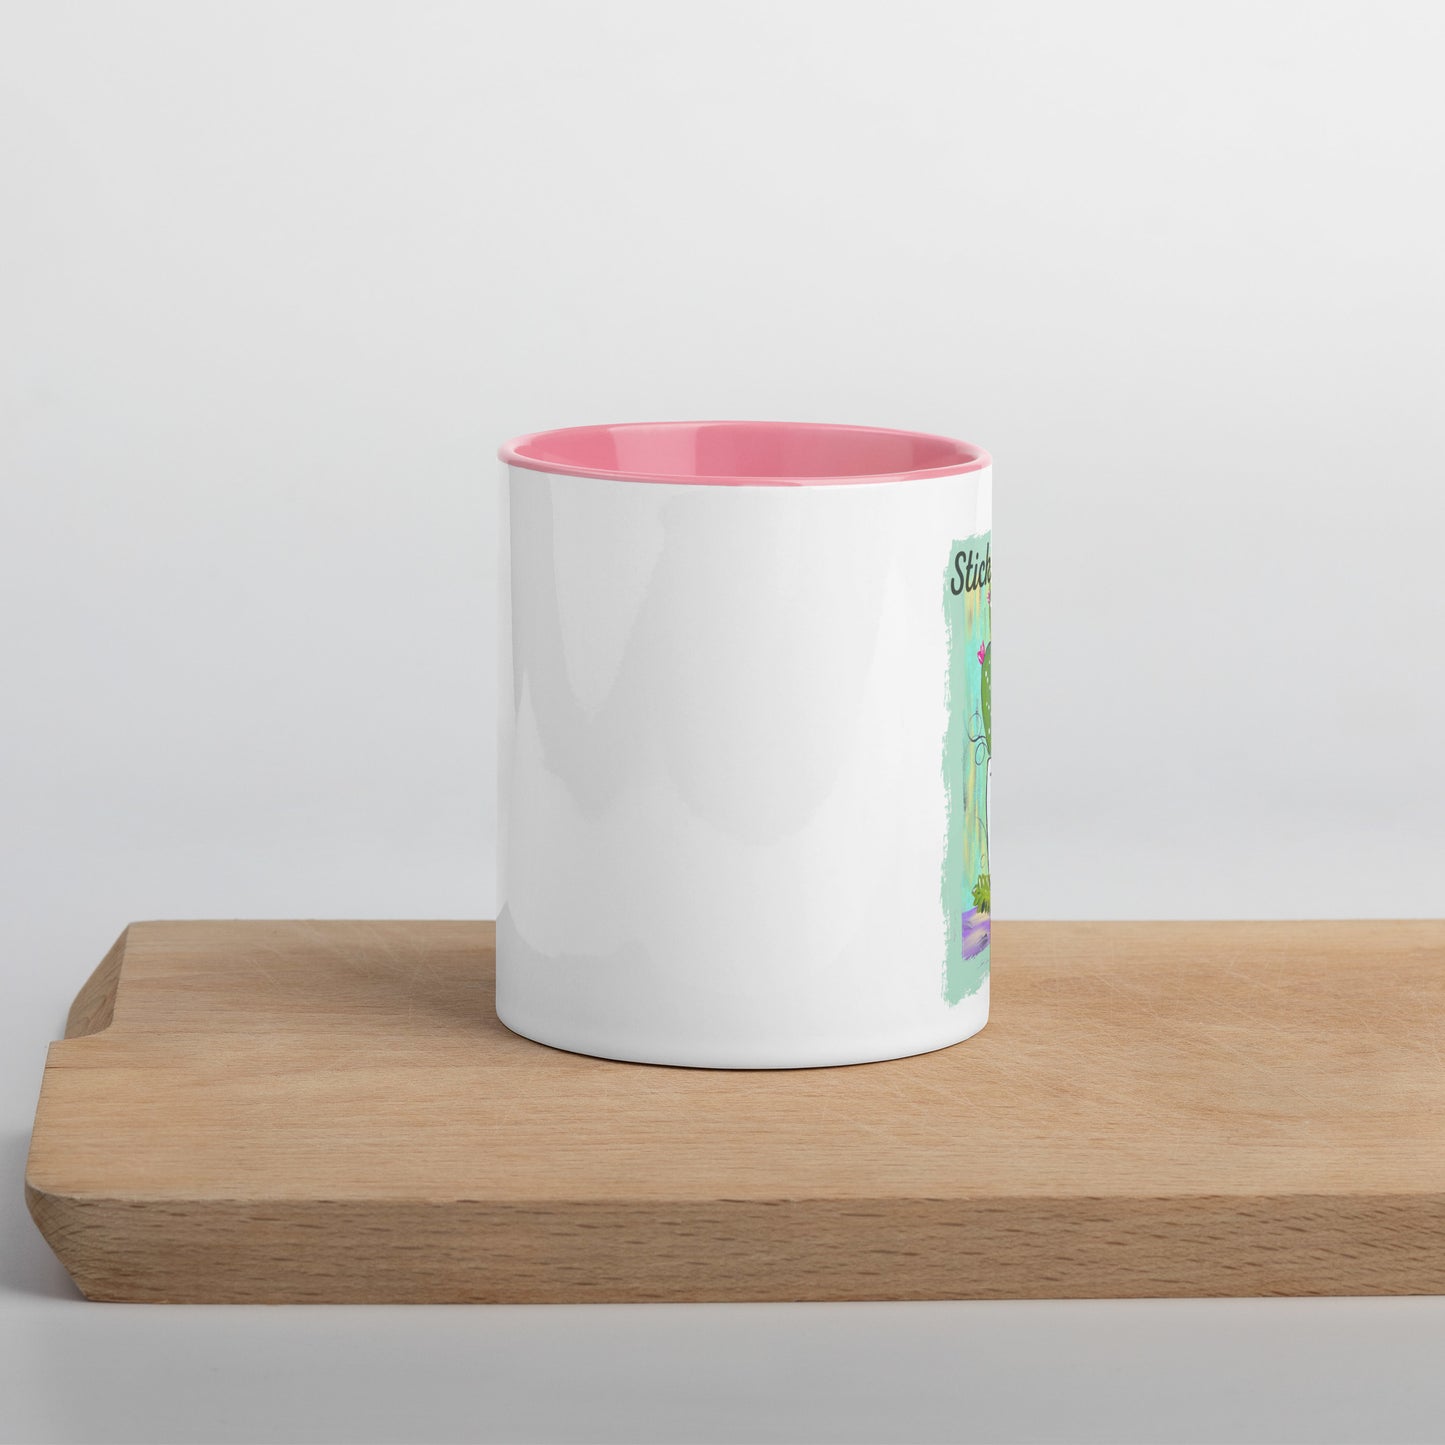 Stick to Kindness Ceramic Mug with Colors Inside